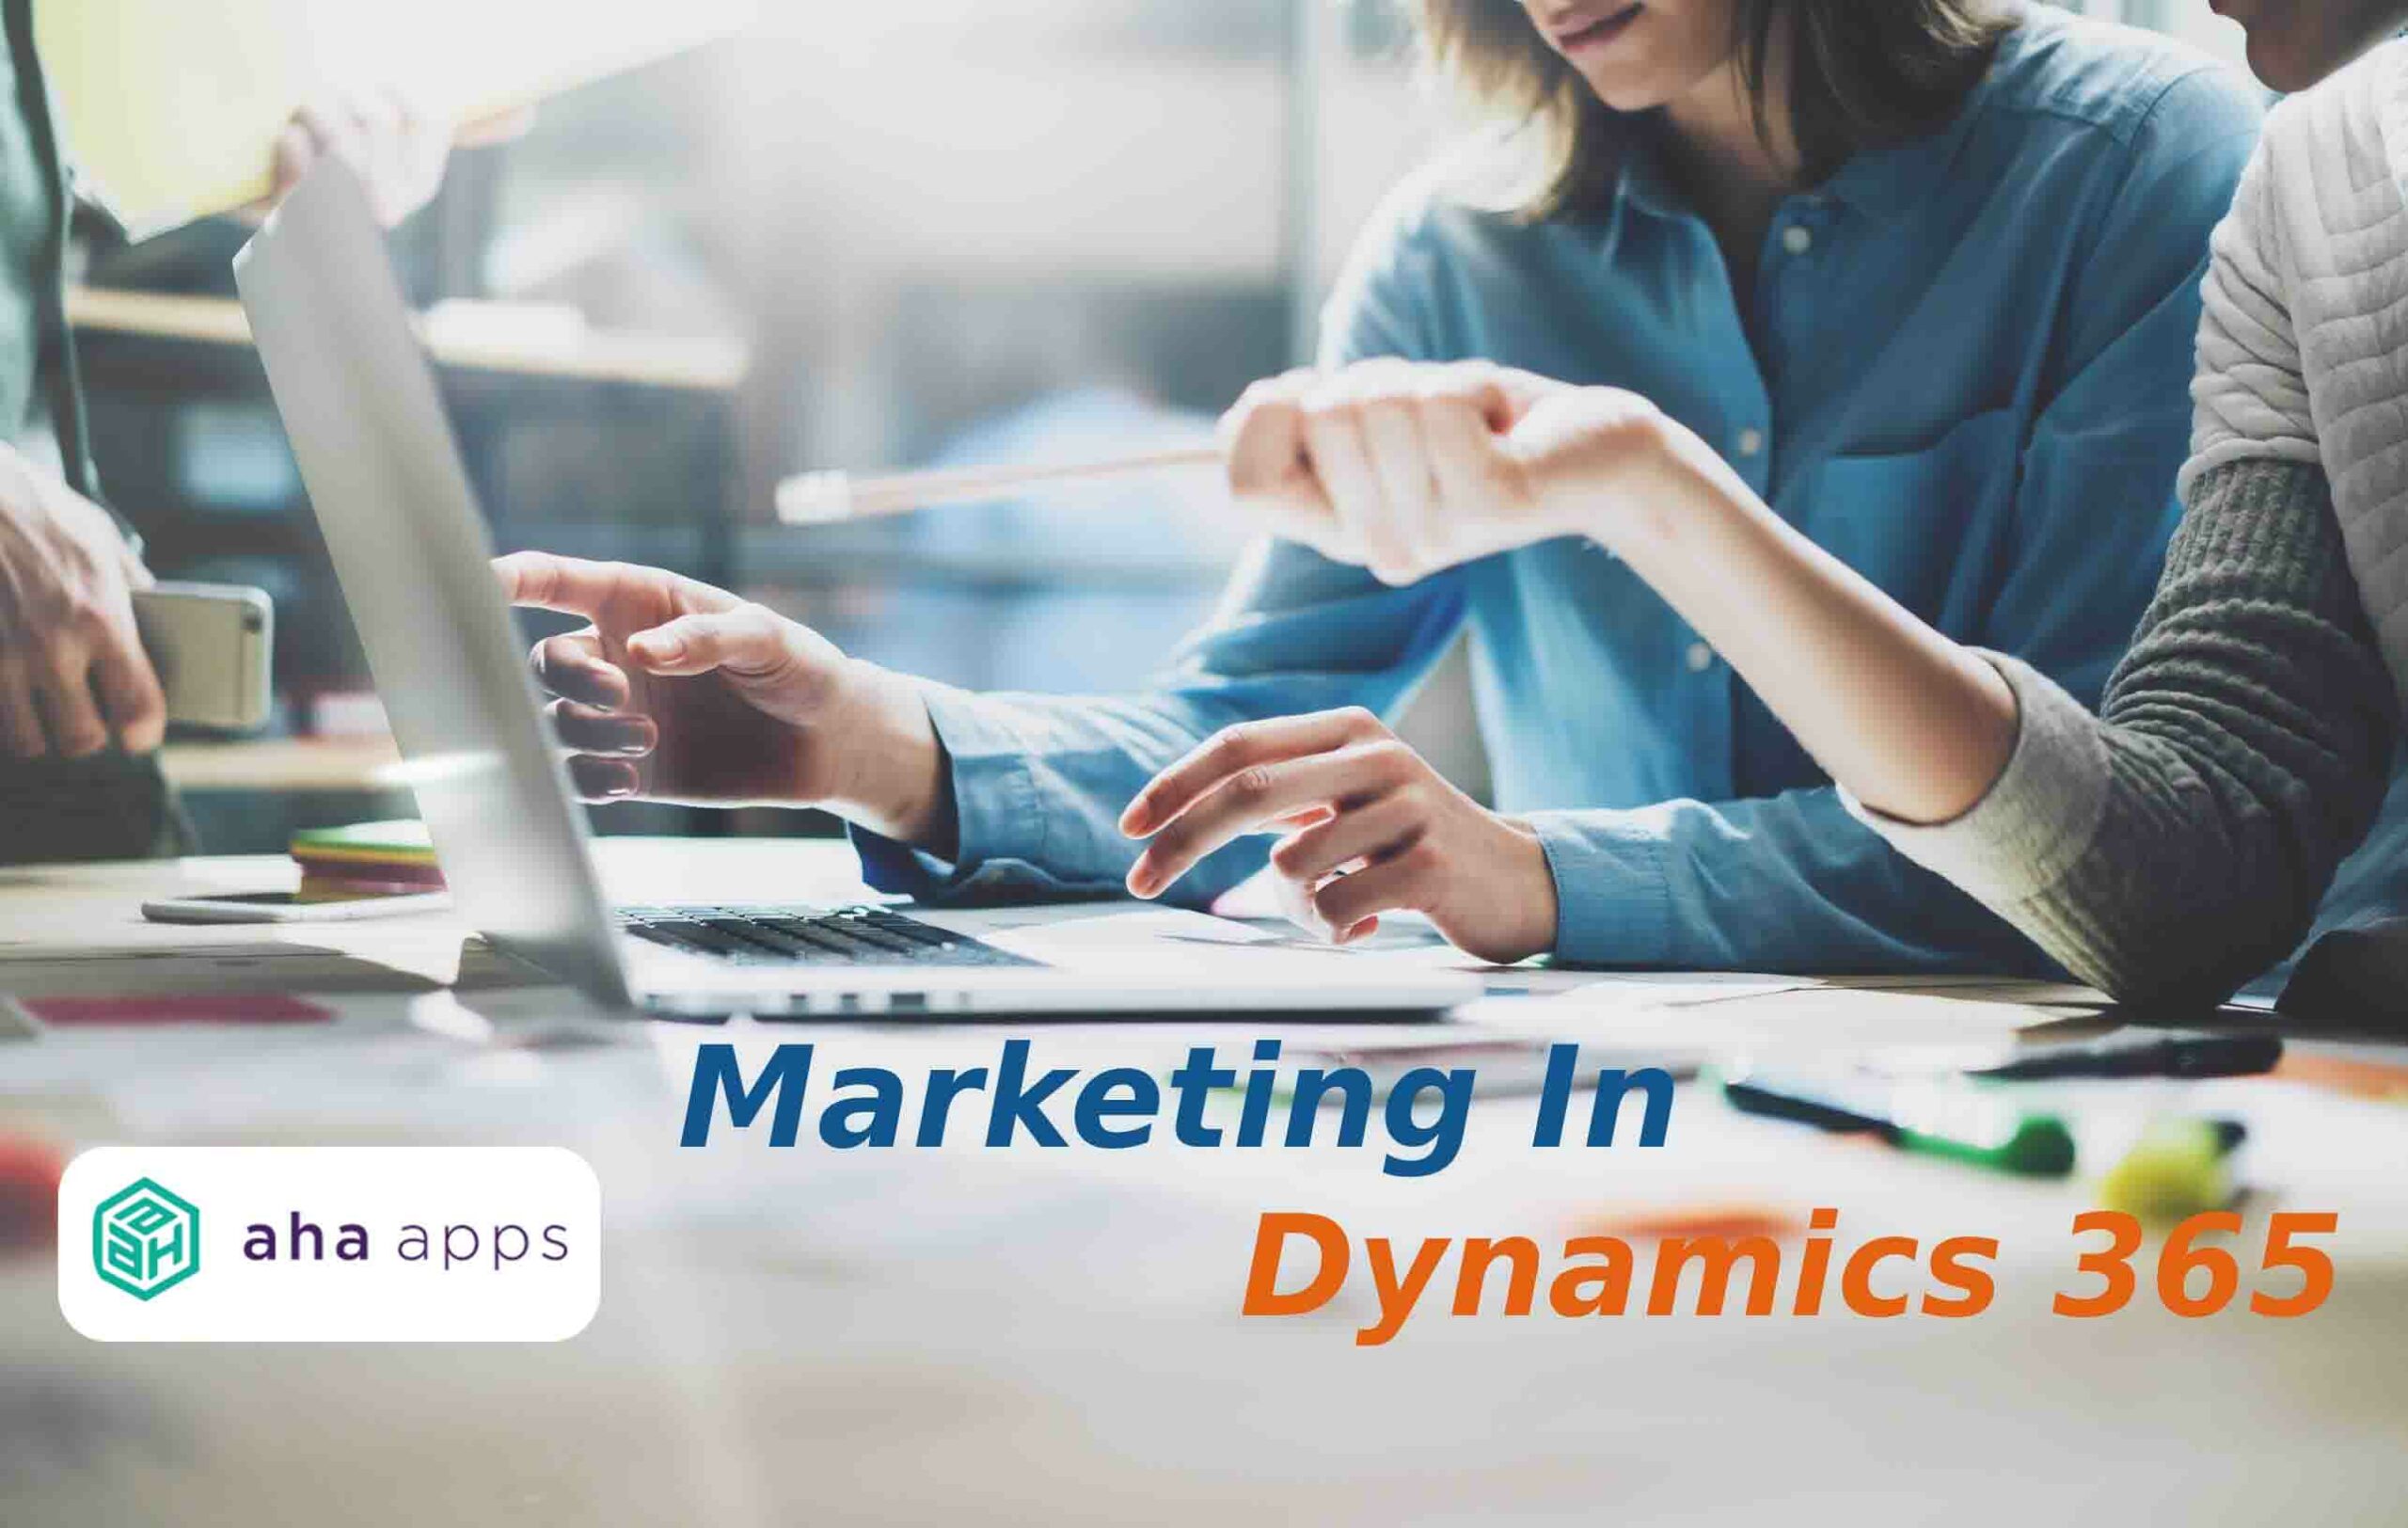 Marketing in Dynamics 365 - AhaApps